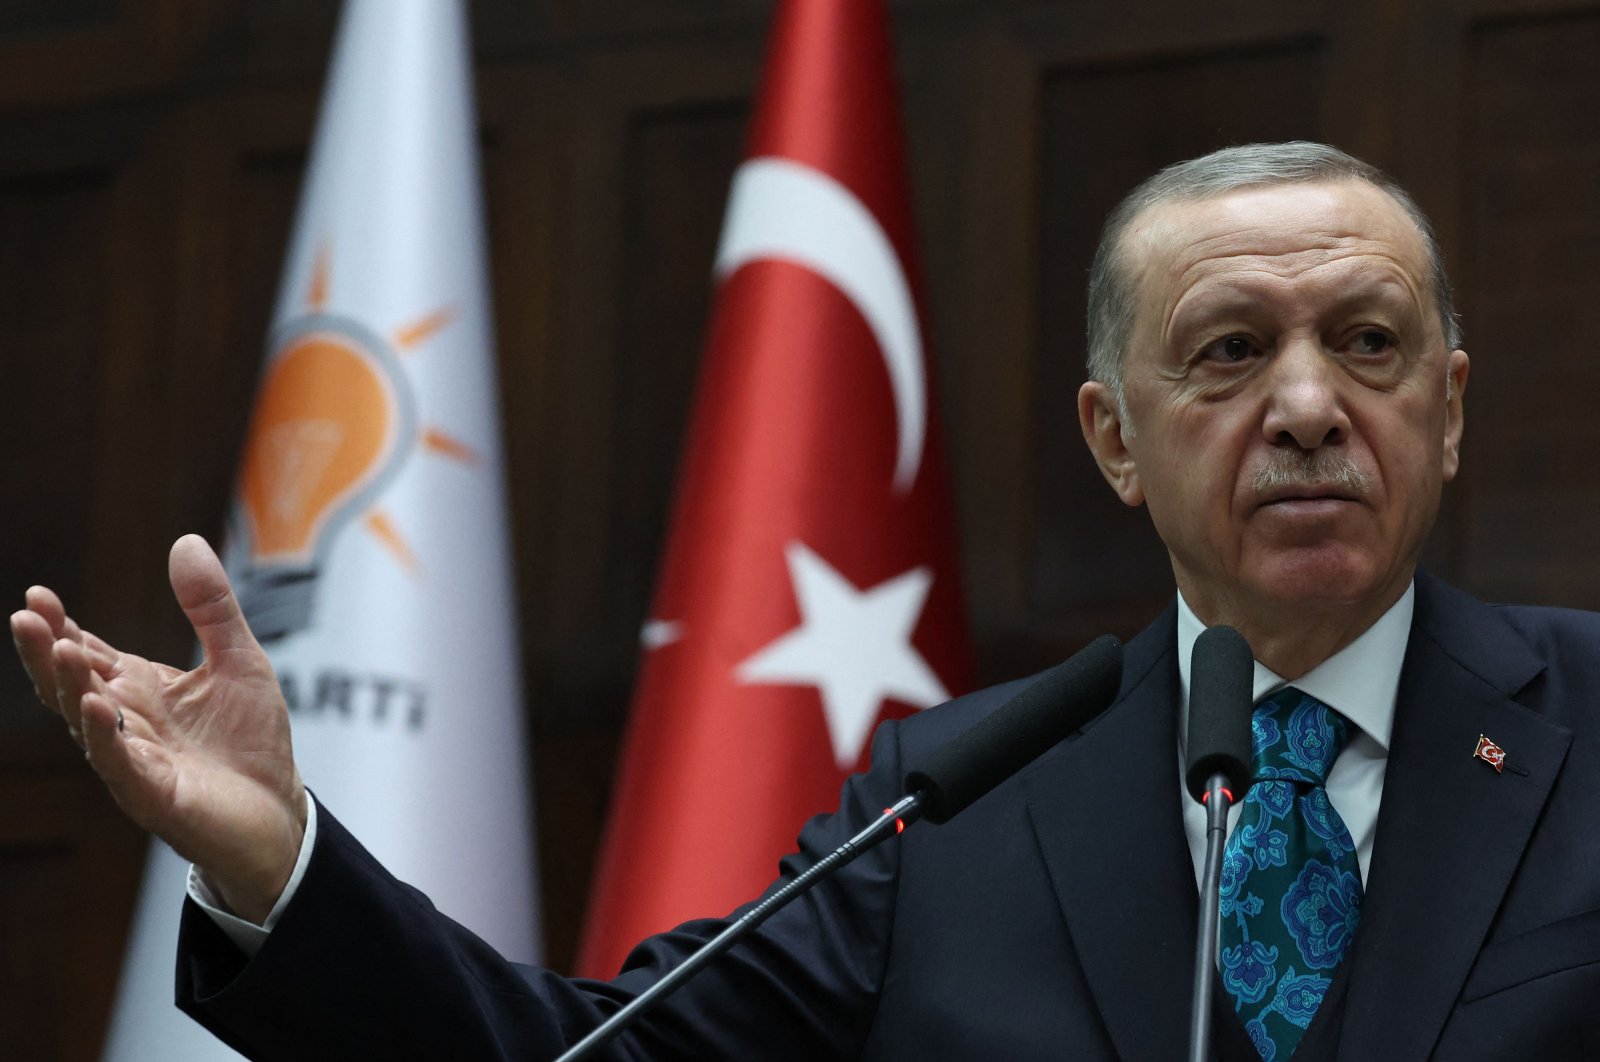 Türkiye untuk memotong listrik, harga gas, menaikkan upah minimum: Erdoğan